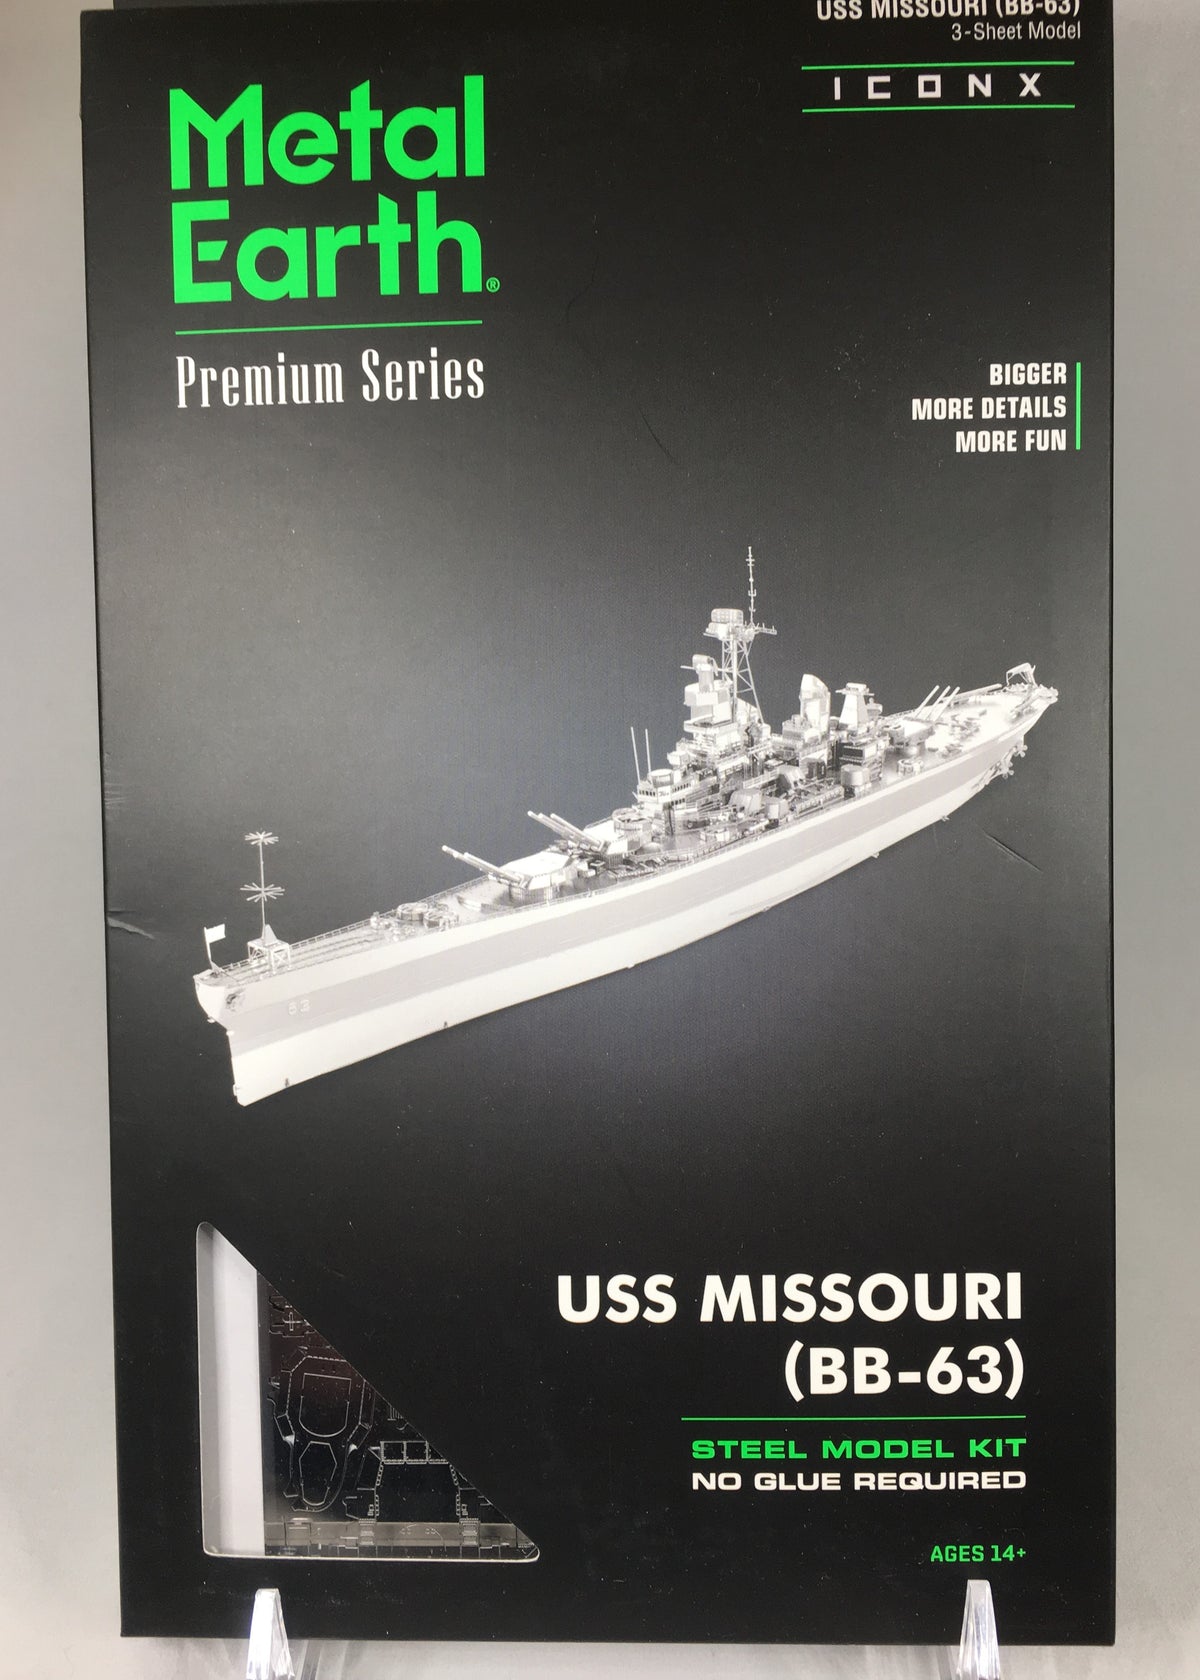 USS Missouri Metal Earth Steel Model Kit